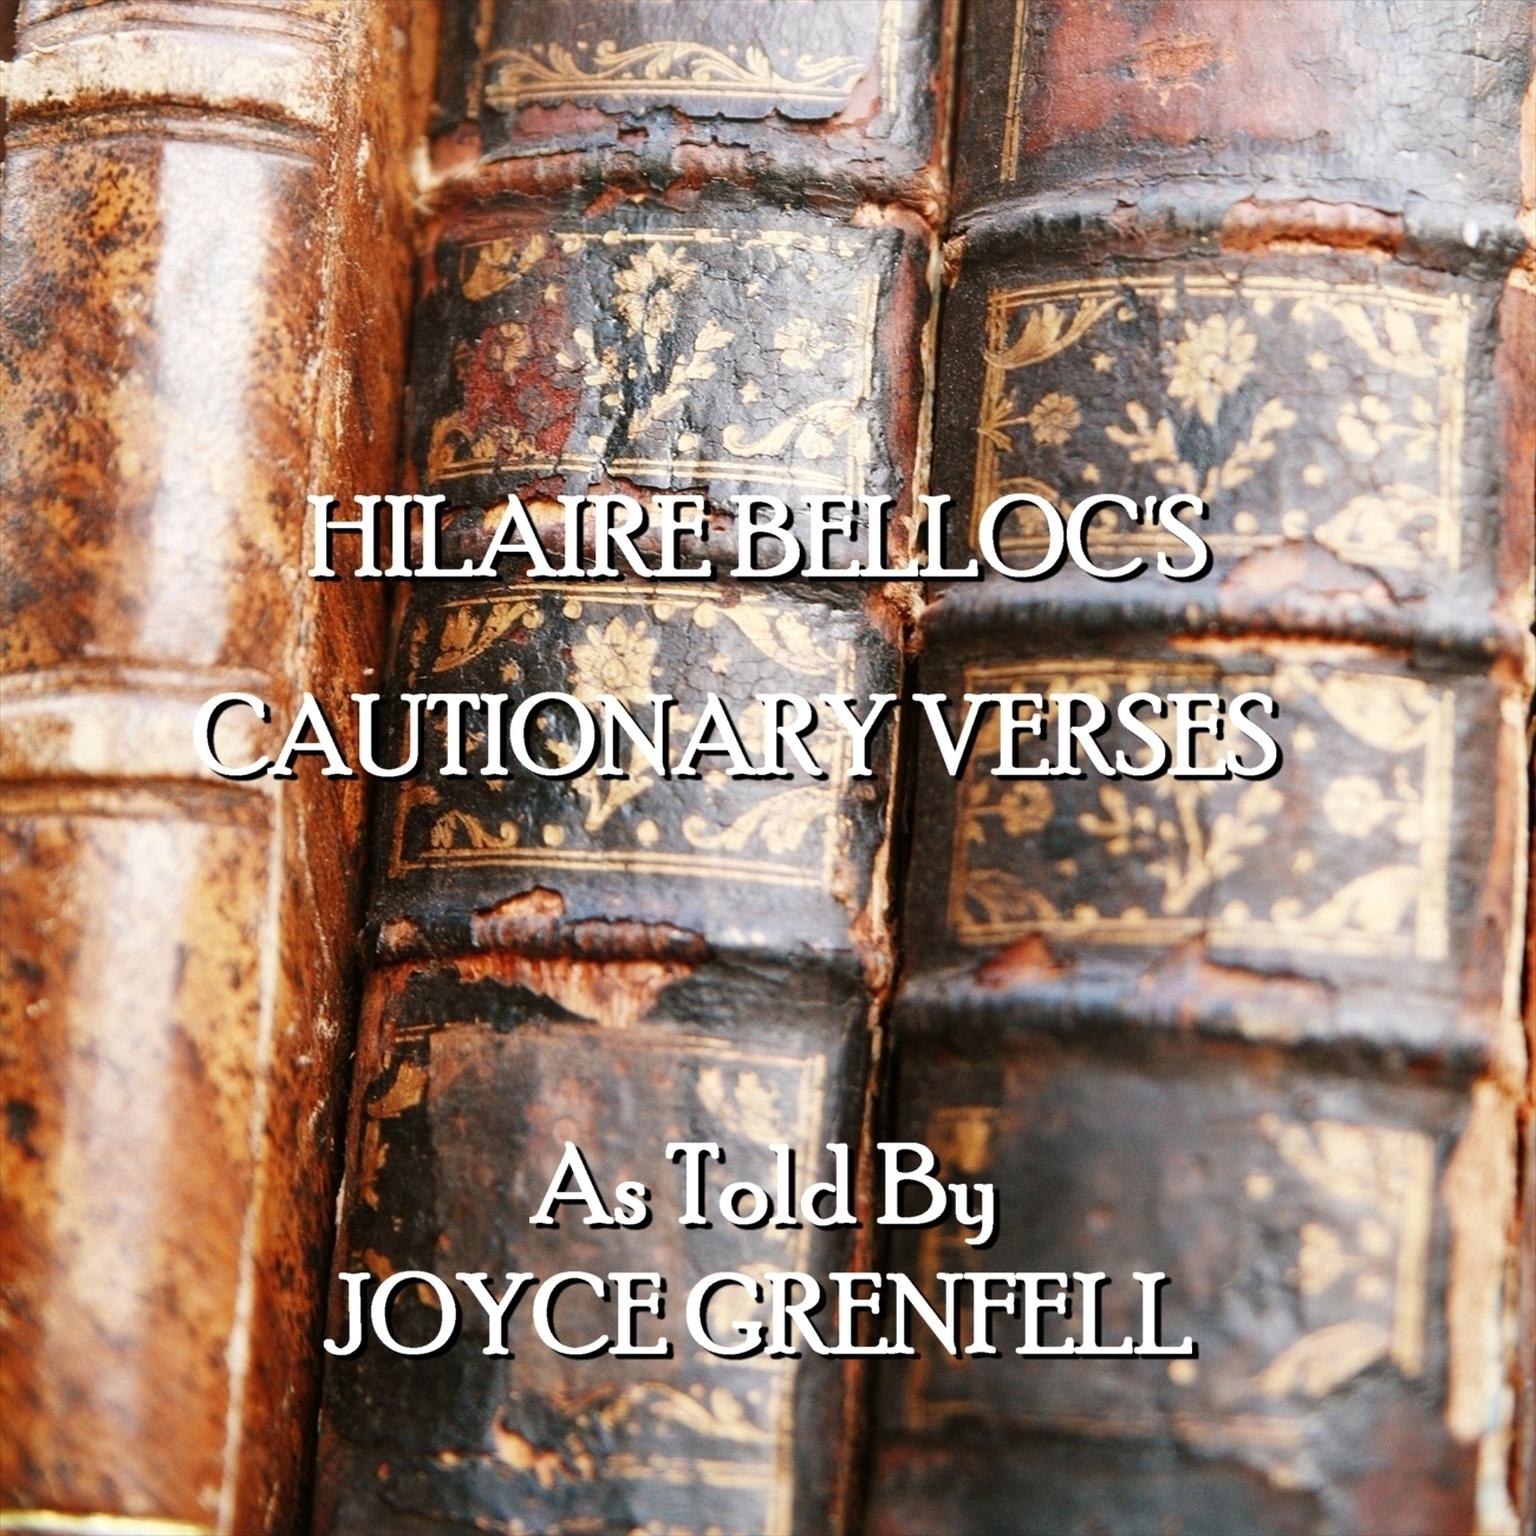 Cautionary Verses (Abridged) Audiobook, by Hilaire Belloc